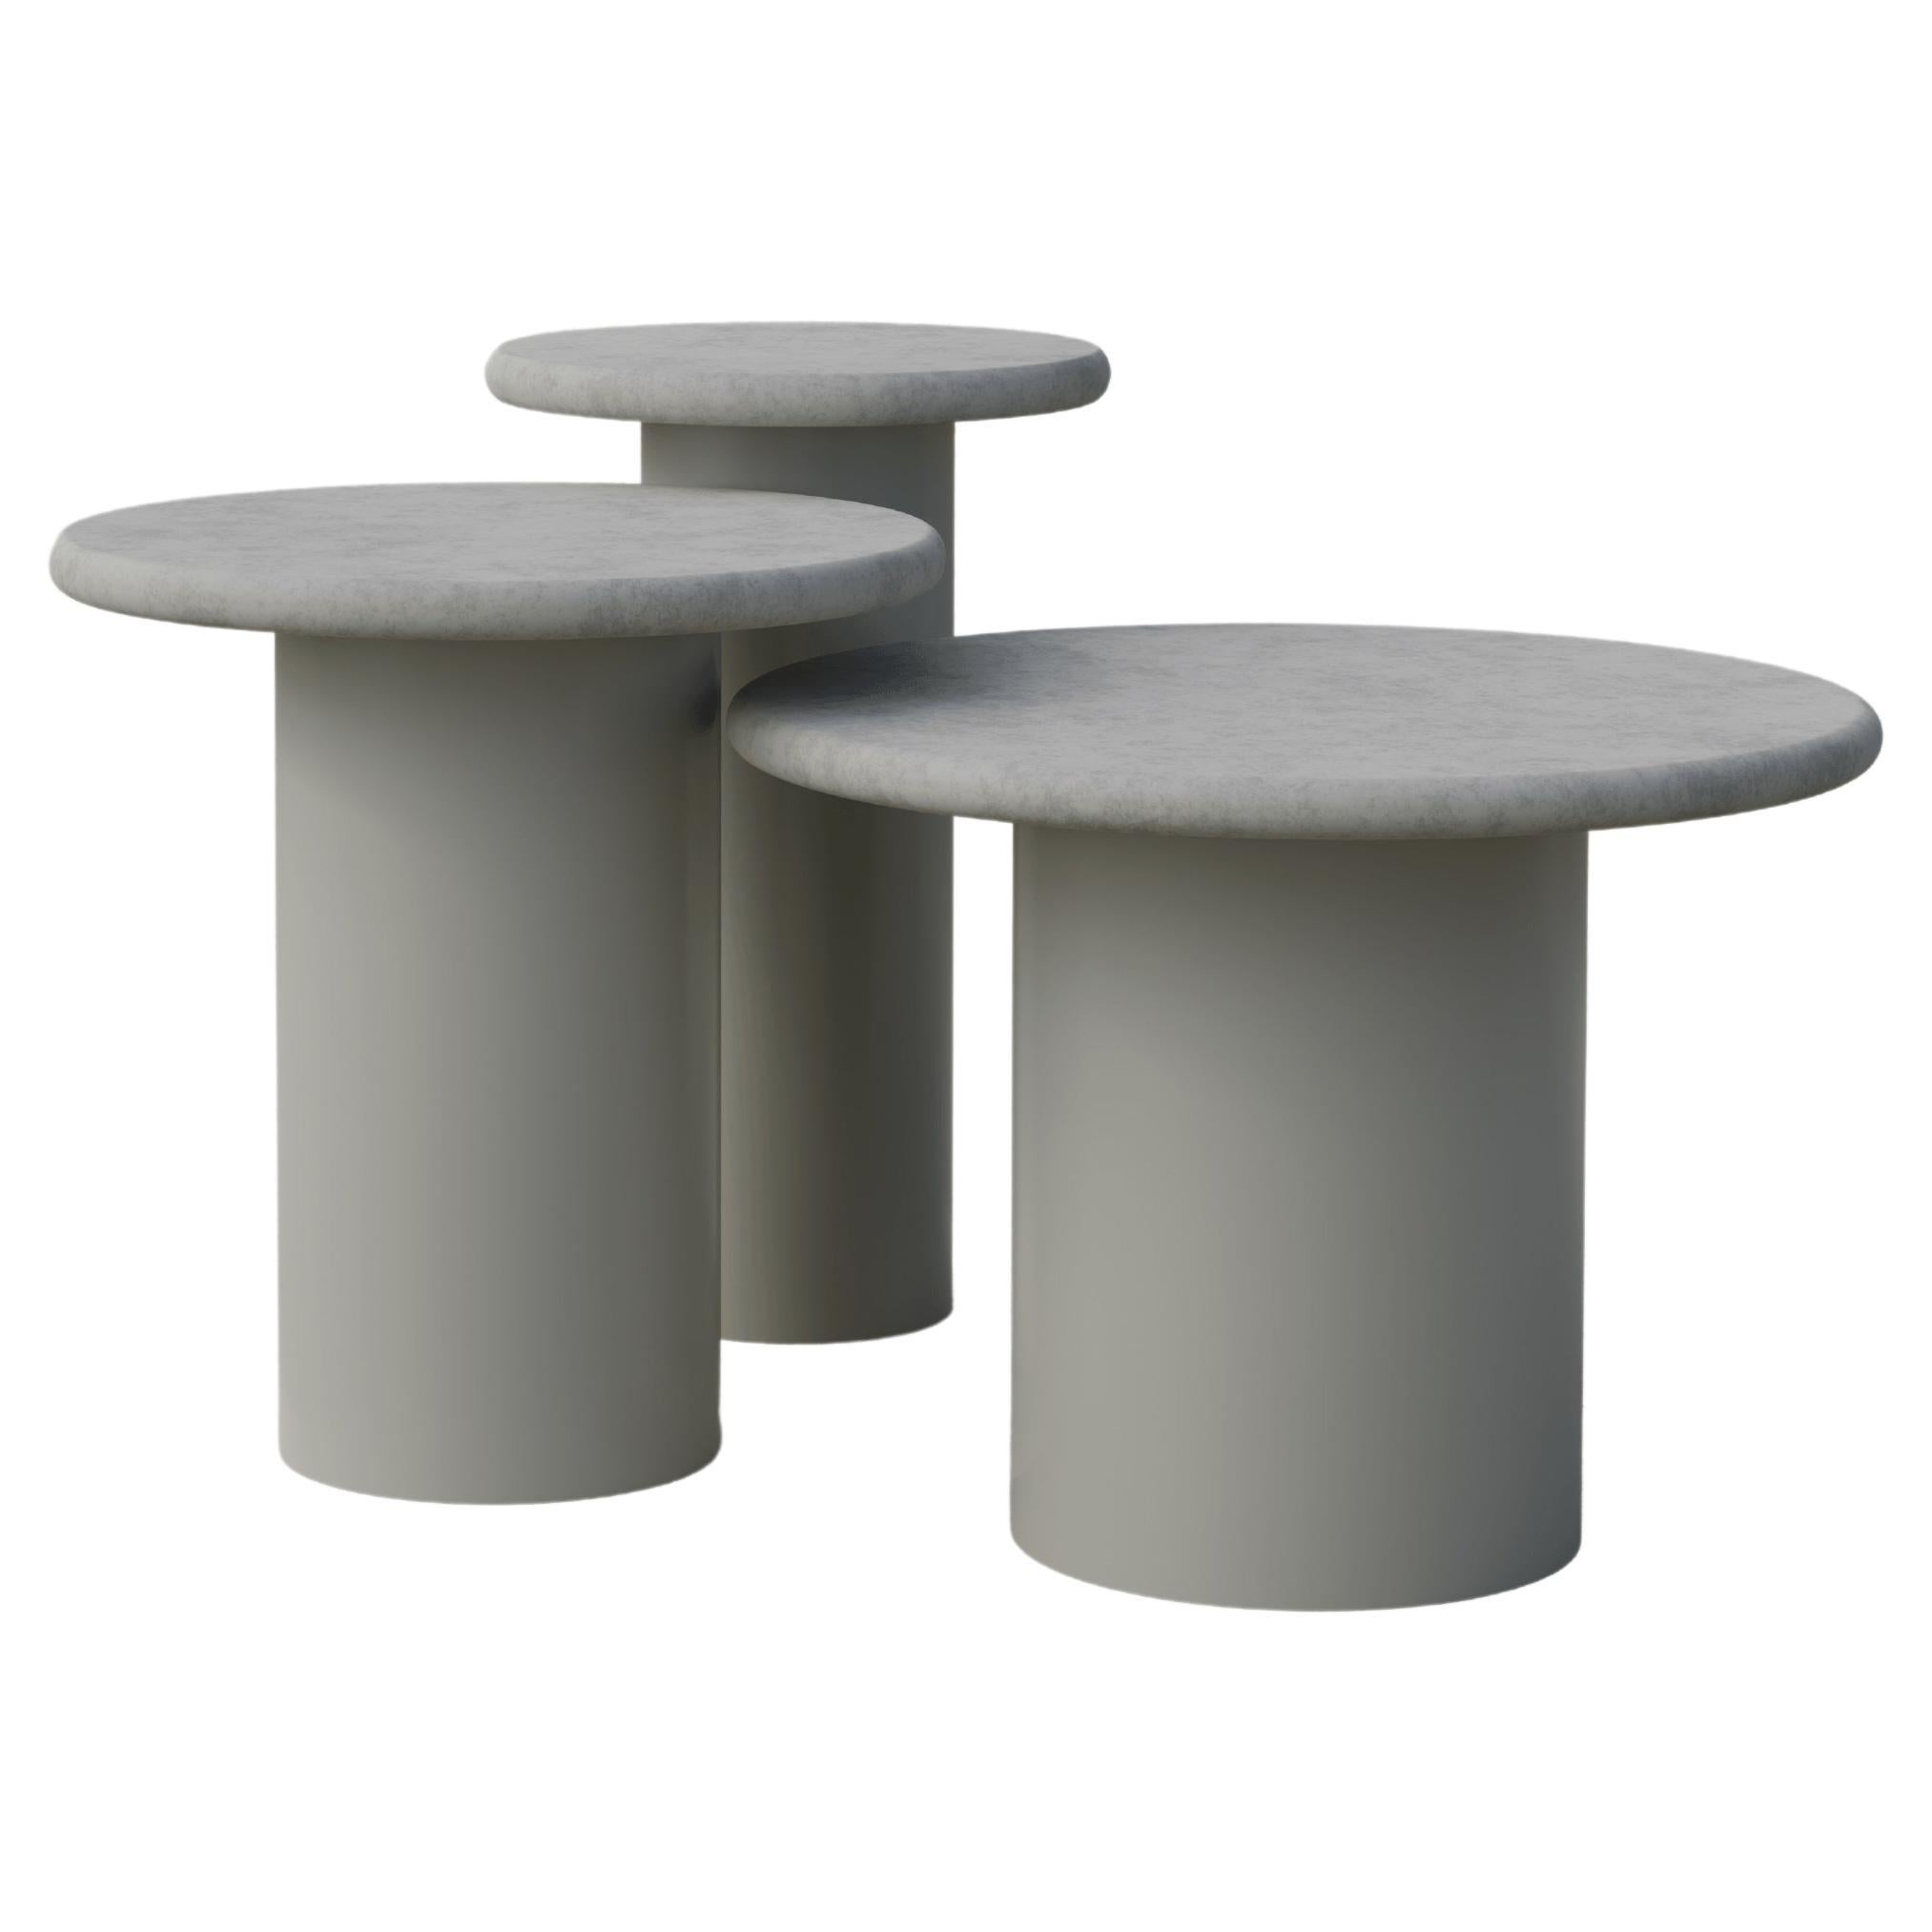 Raindrop Side Table Set, 300, 400, 500, Microcrete / Pebble Grey For Sale